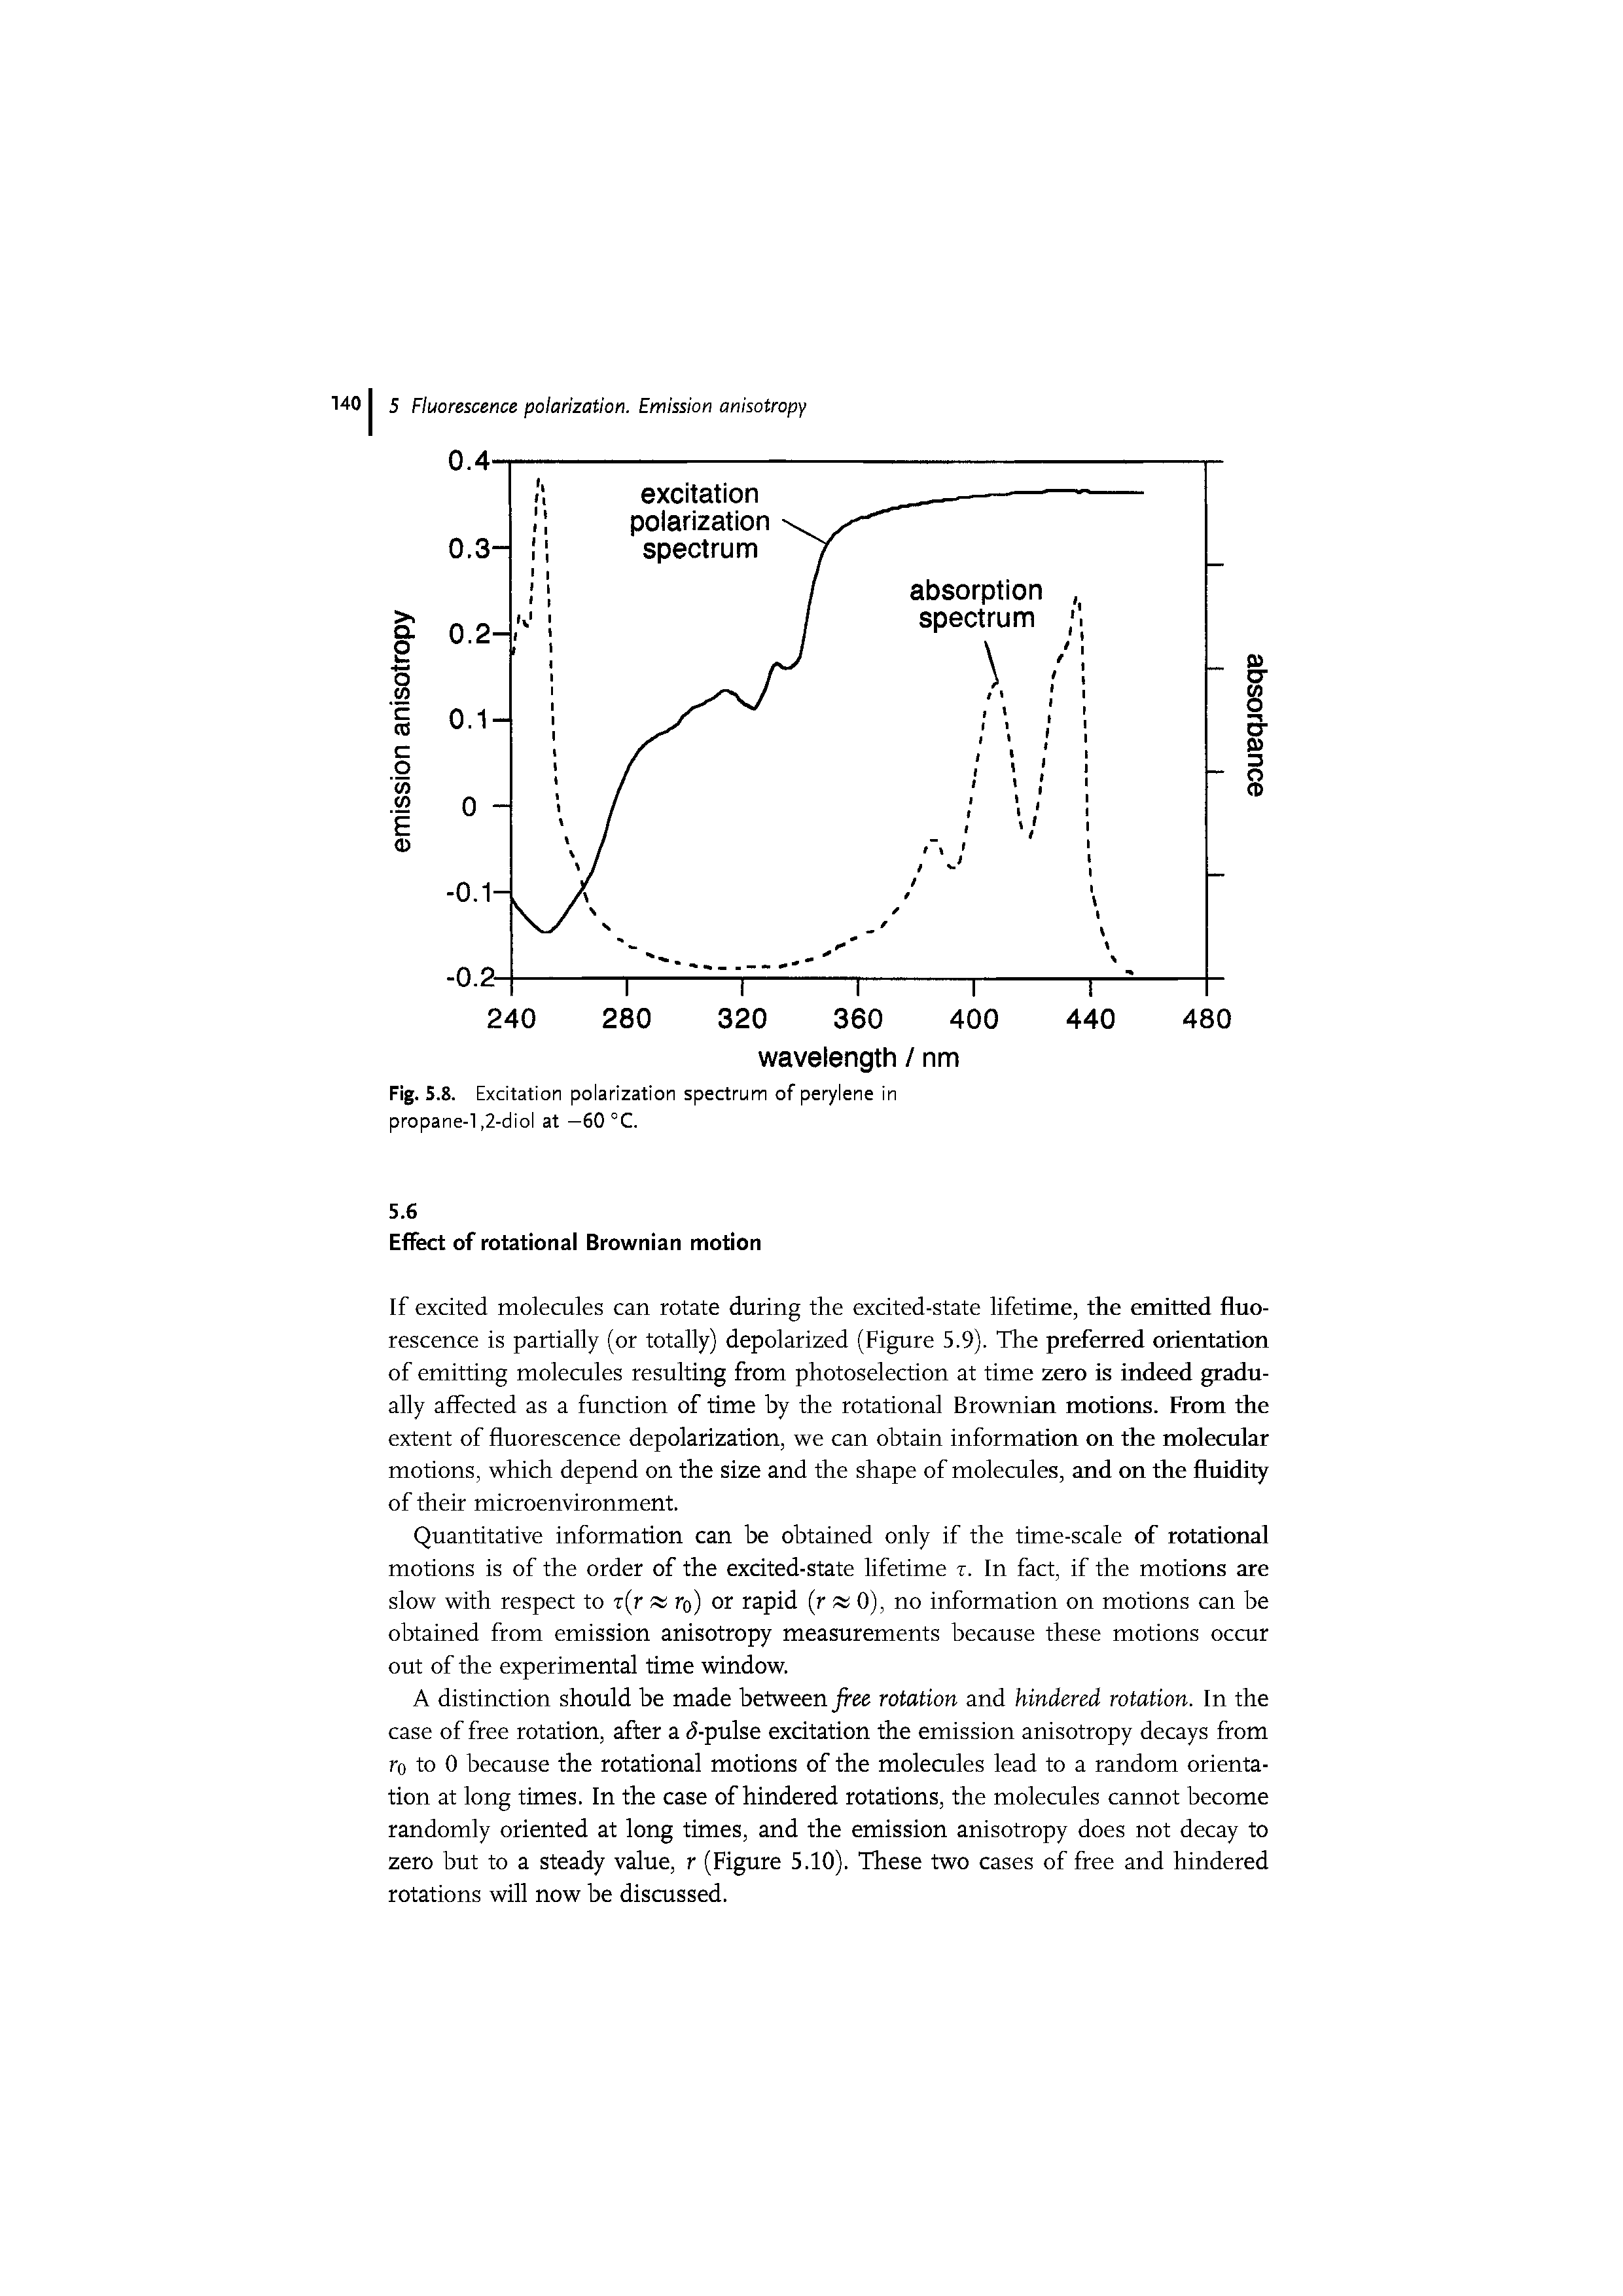 Fig. S.8. Excitation polarization spectrum of perylene in propane-1,2-diol at — 60 °C.